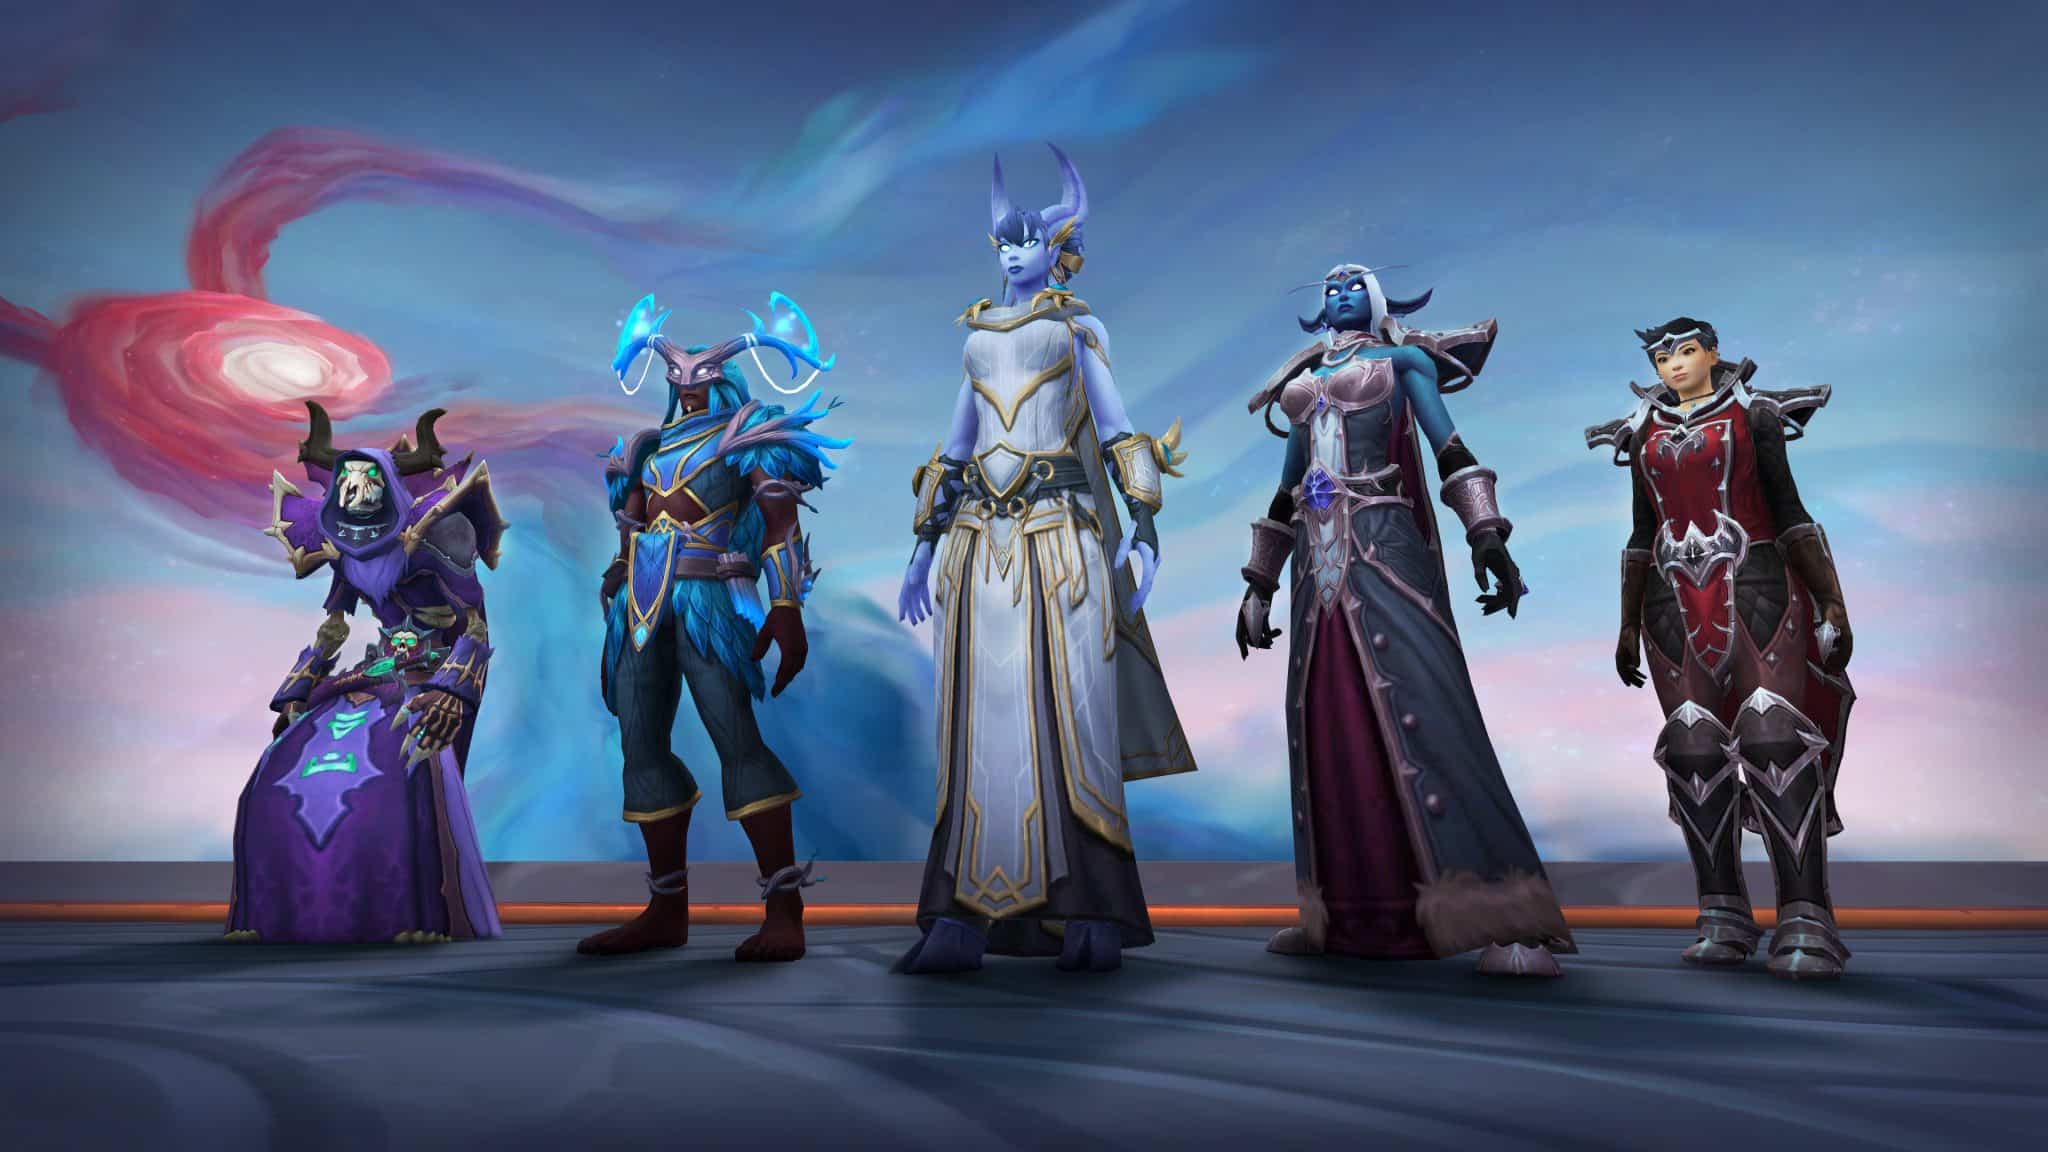 Silver-Thread Armor - Item - World of Warcraft